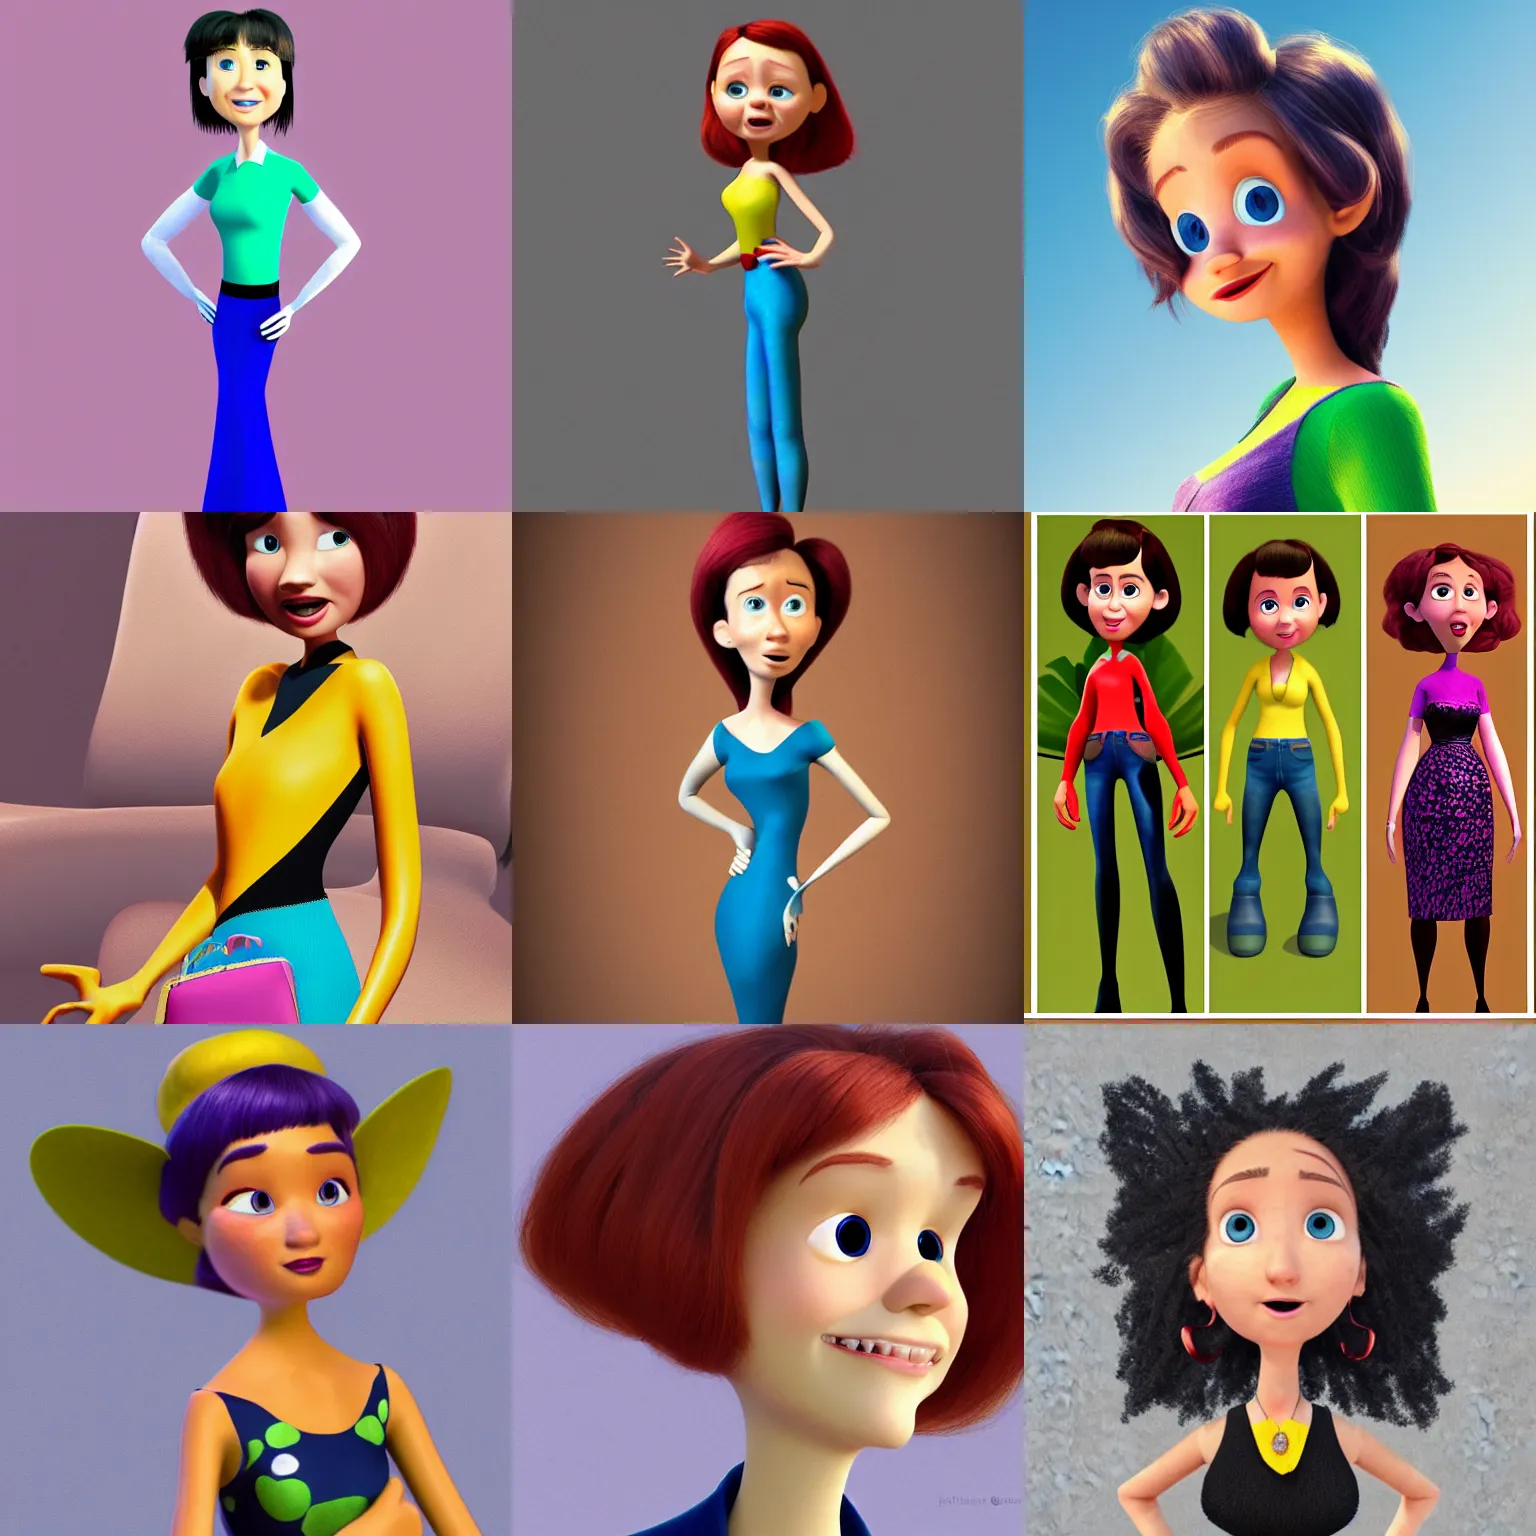 Prompt: Pixar style woman